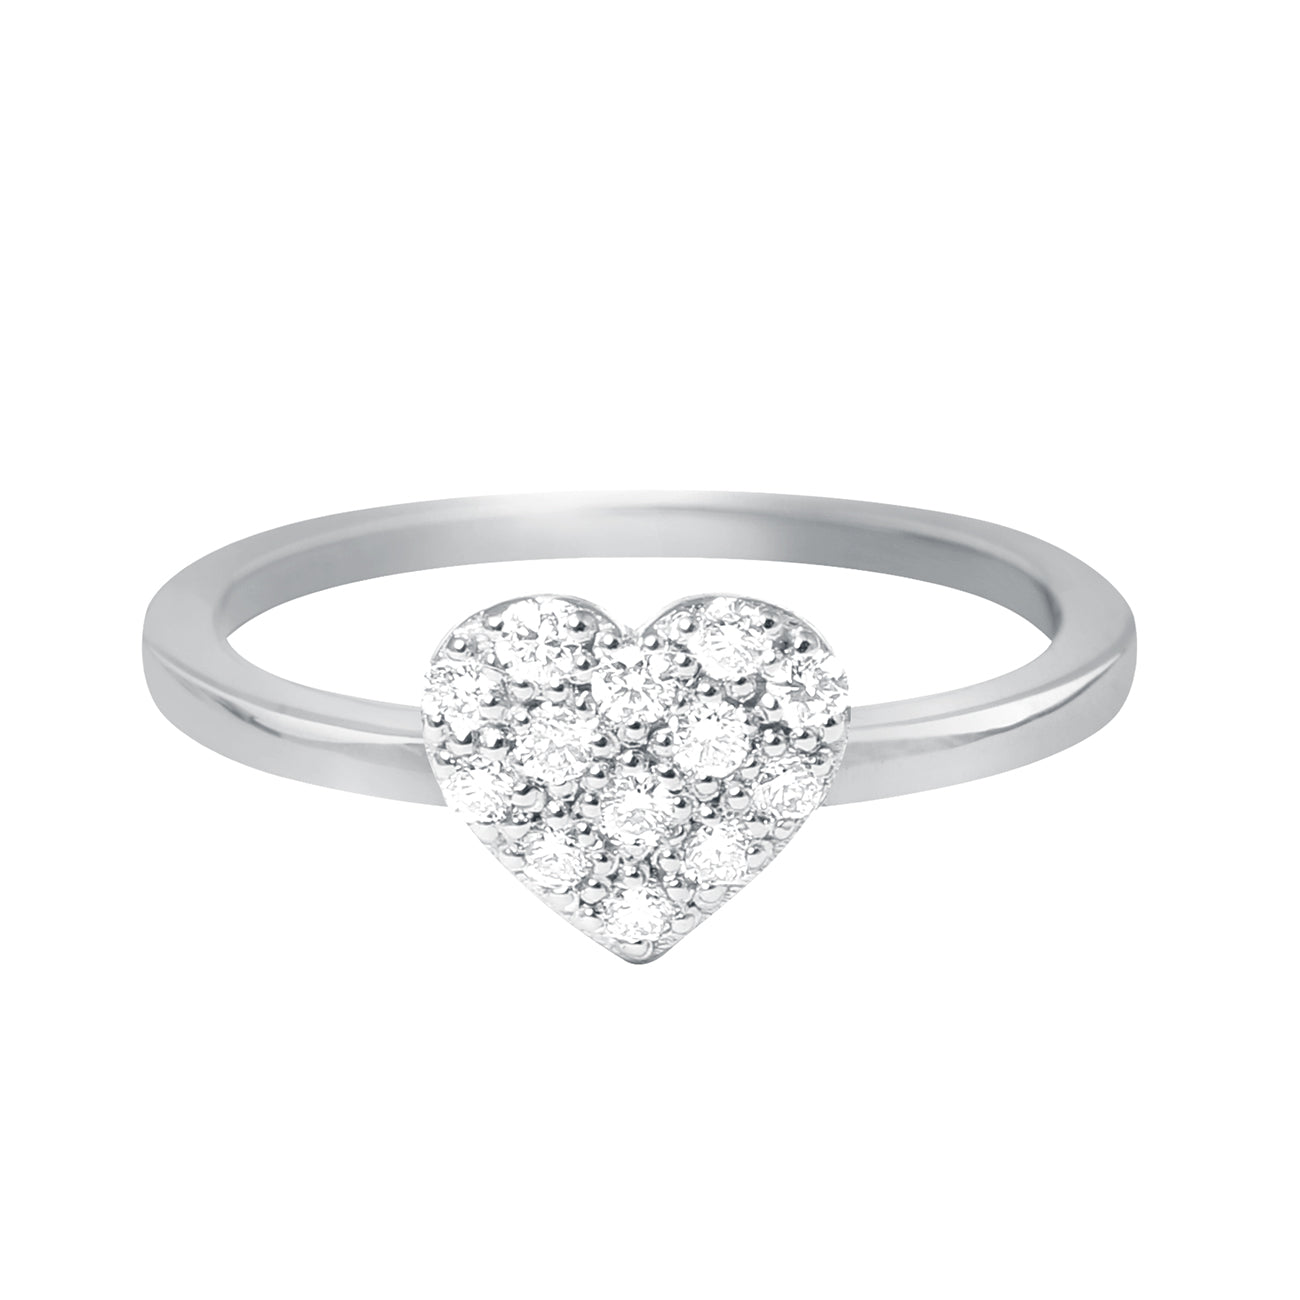 Gigi Clozeau - In Love Diamond Ring, White Gold, Size 5.75